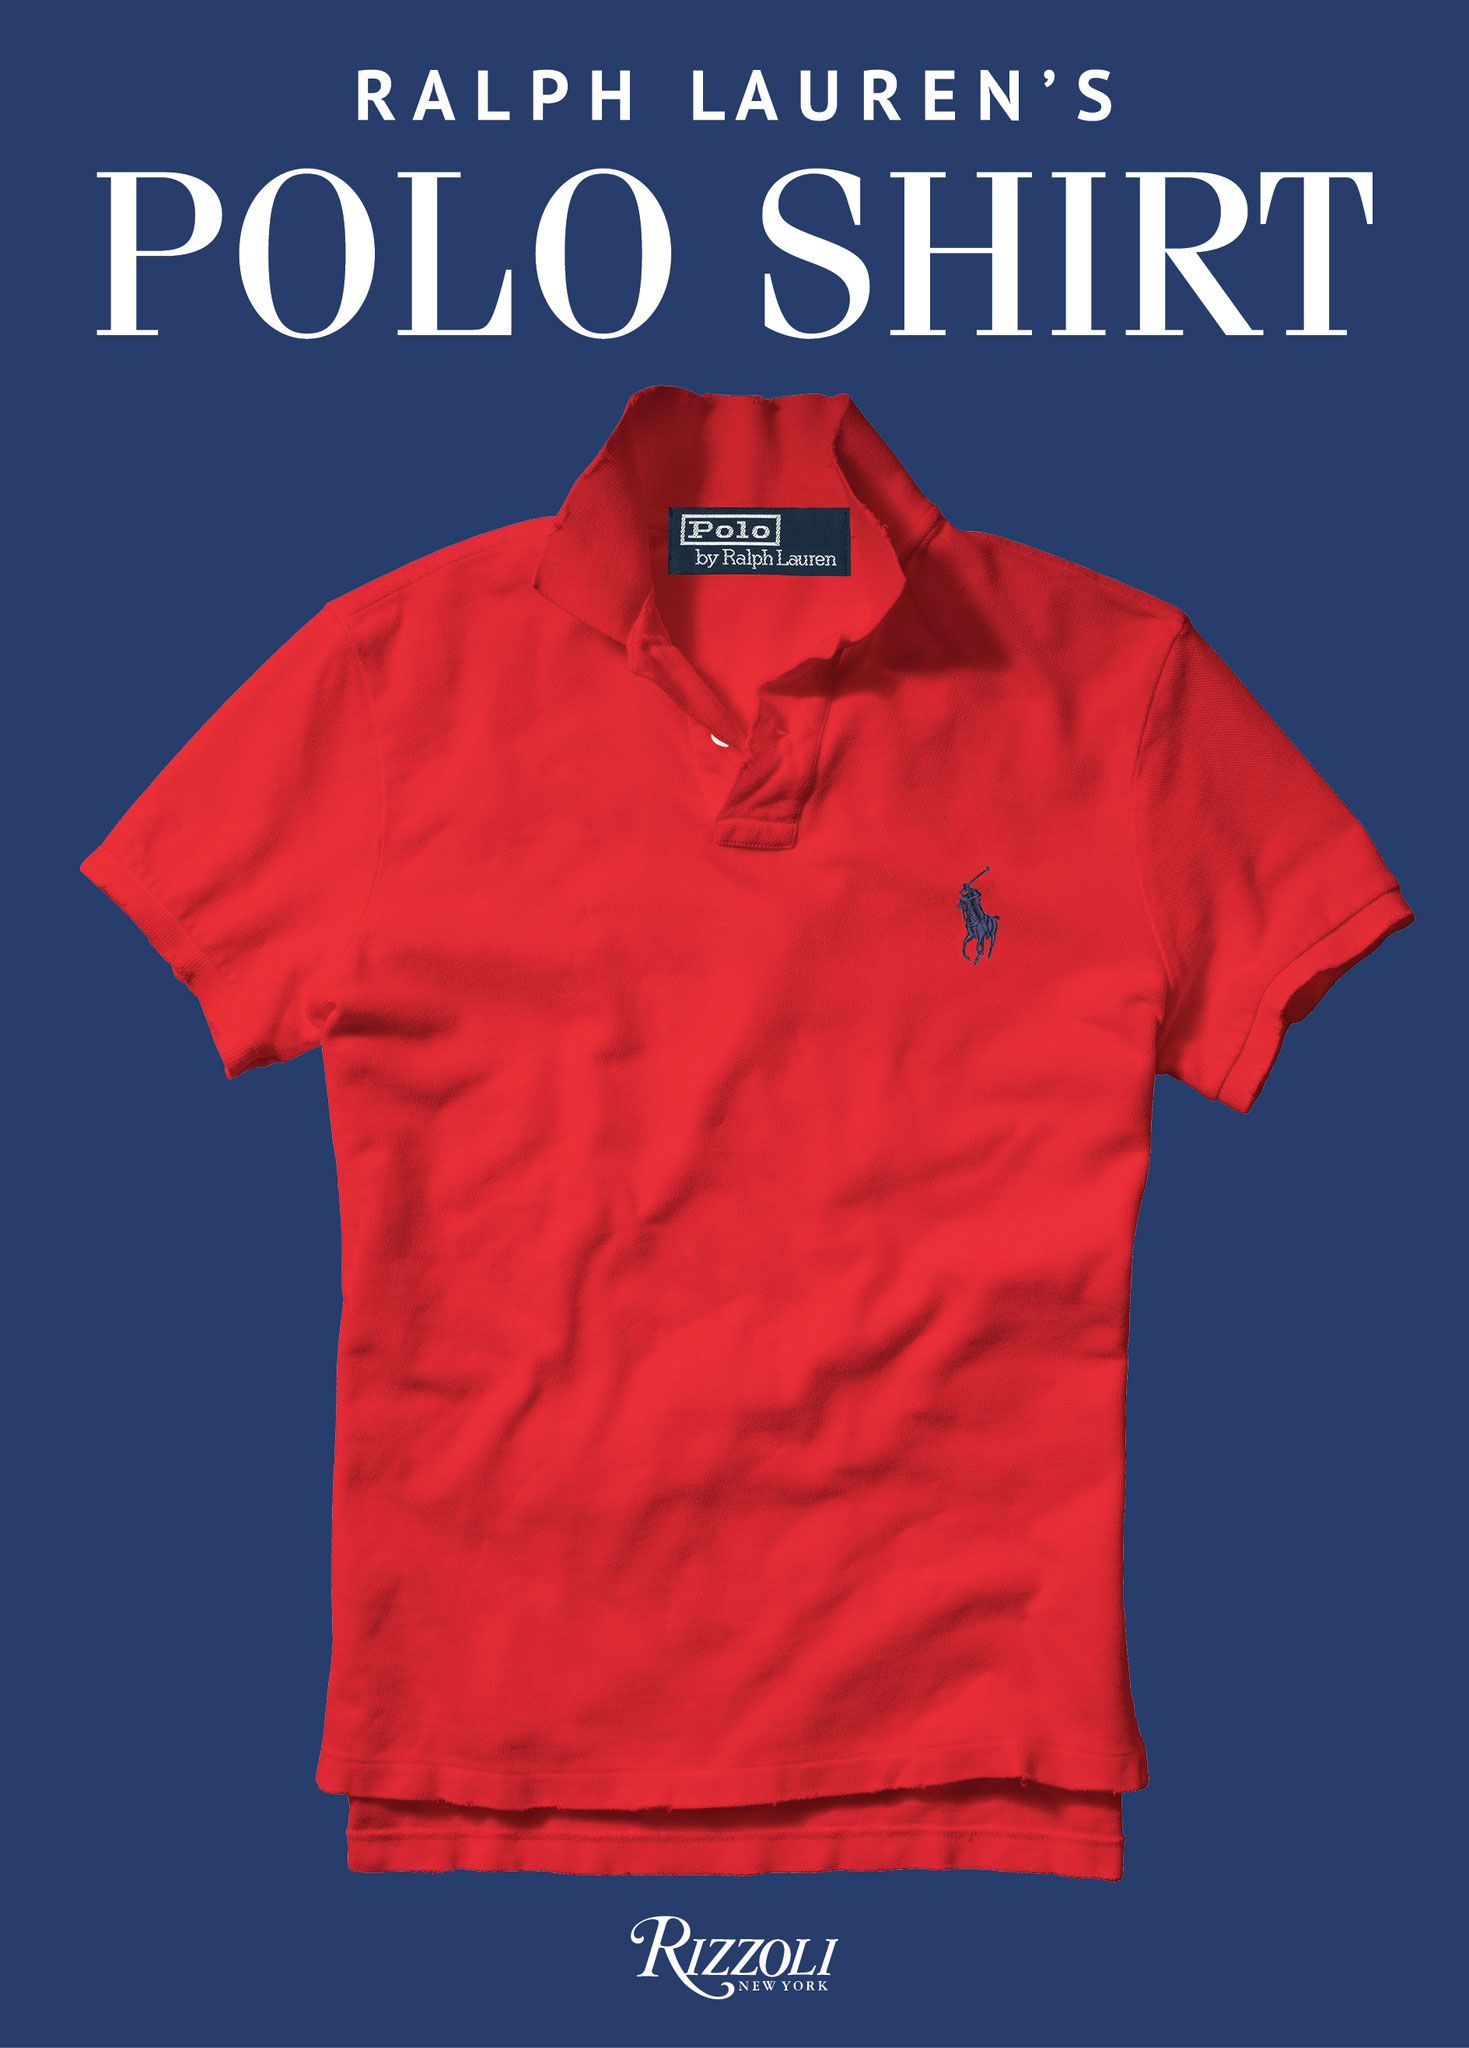 Ralph Lauren, Biography, Fashion, Polo Shirts, Logo, & Facts